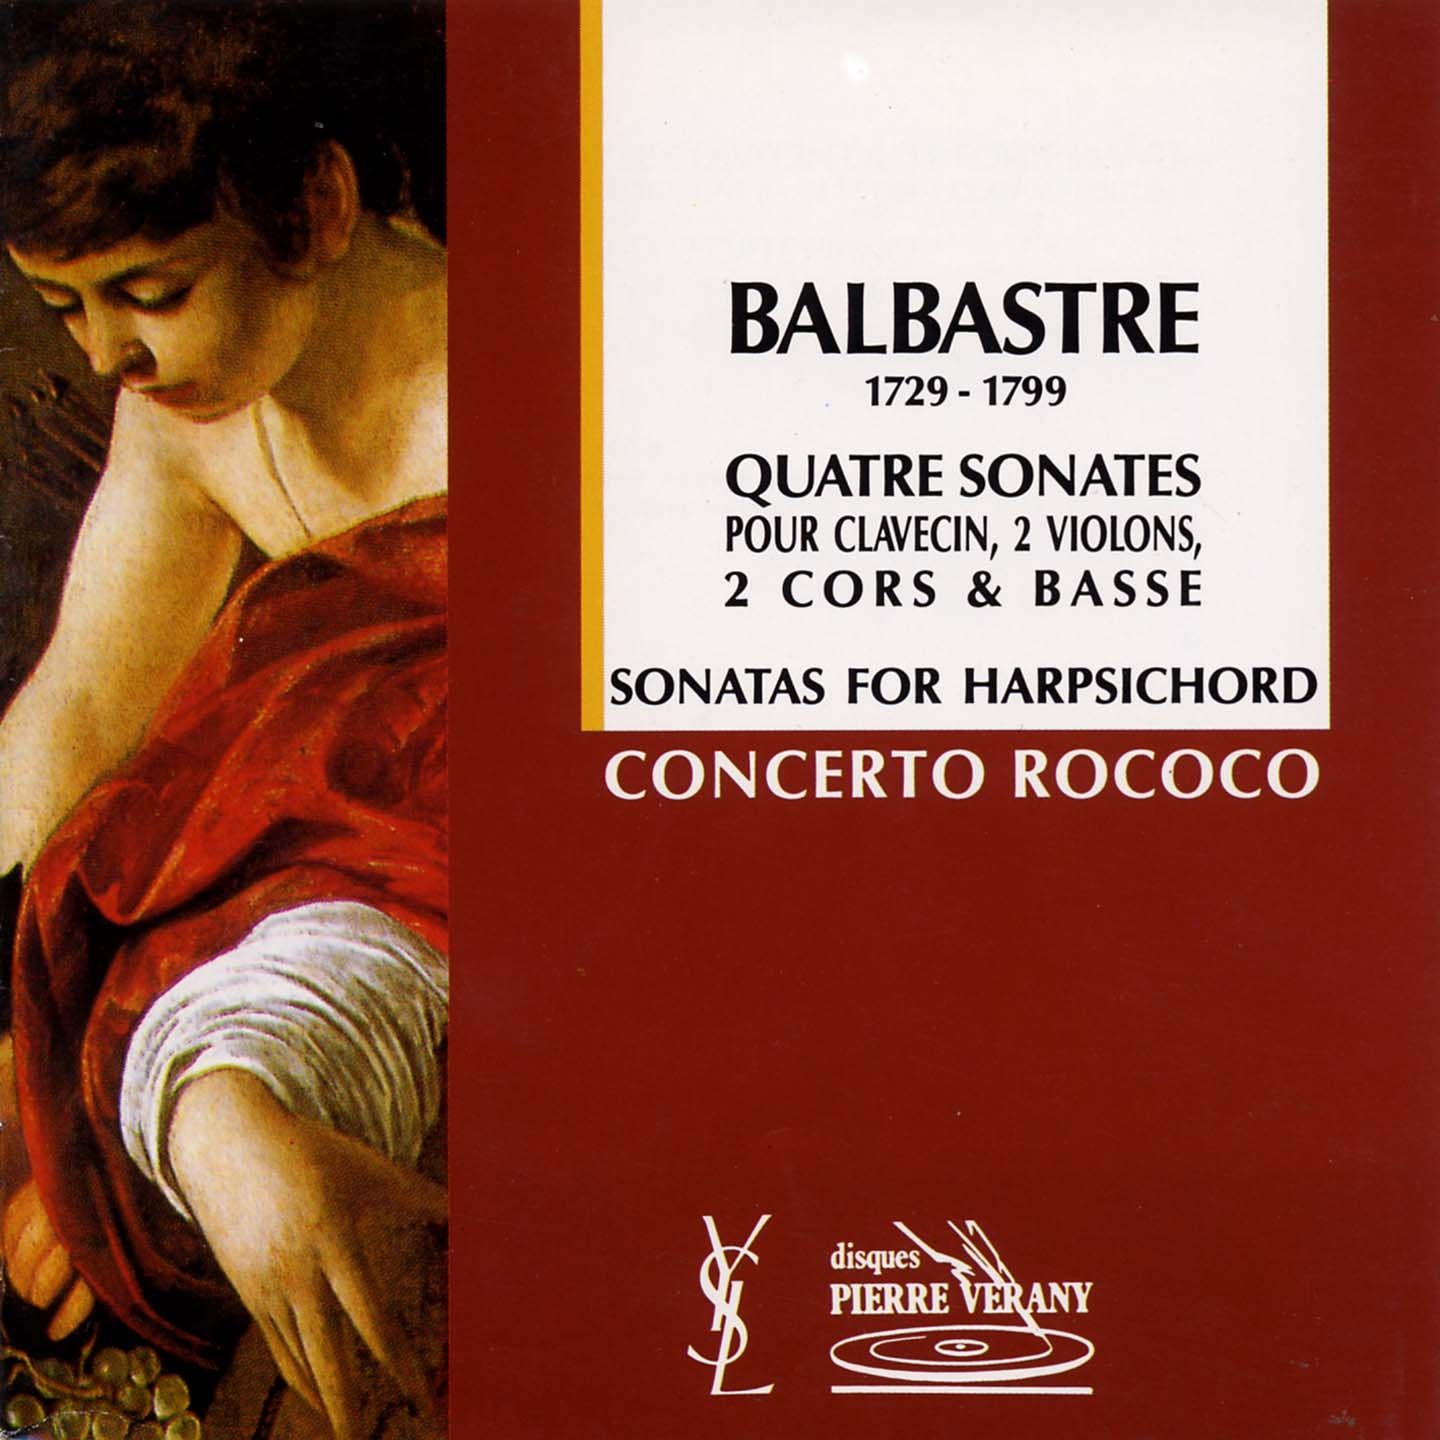 Balbastre - Quatre sonates pour clavecin, 2 violons, 2 cors & basse - Le Concerto Rococo